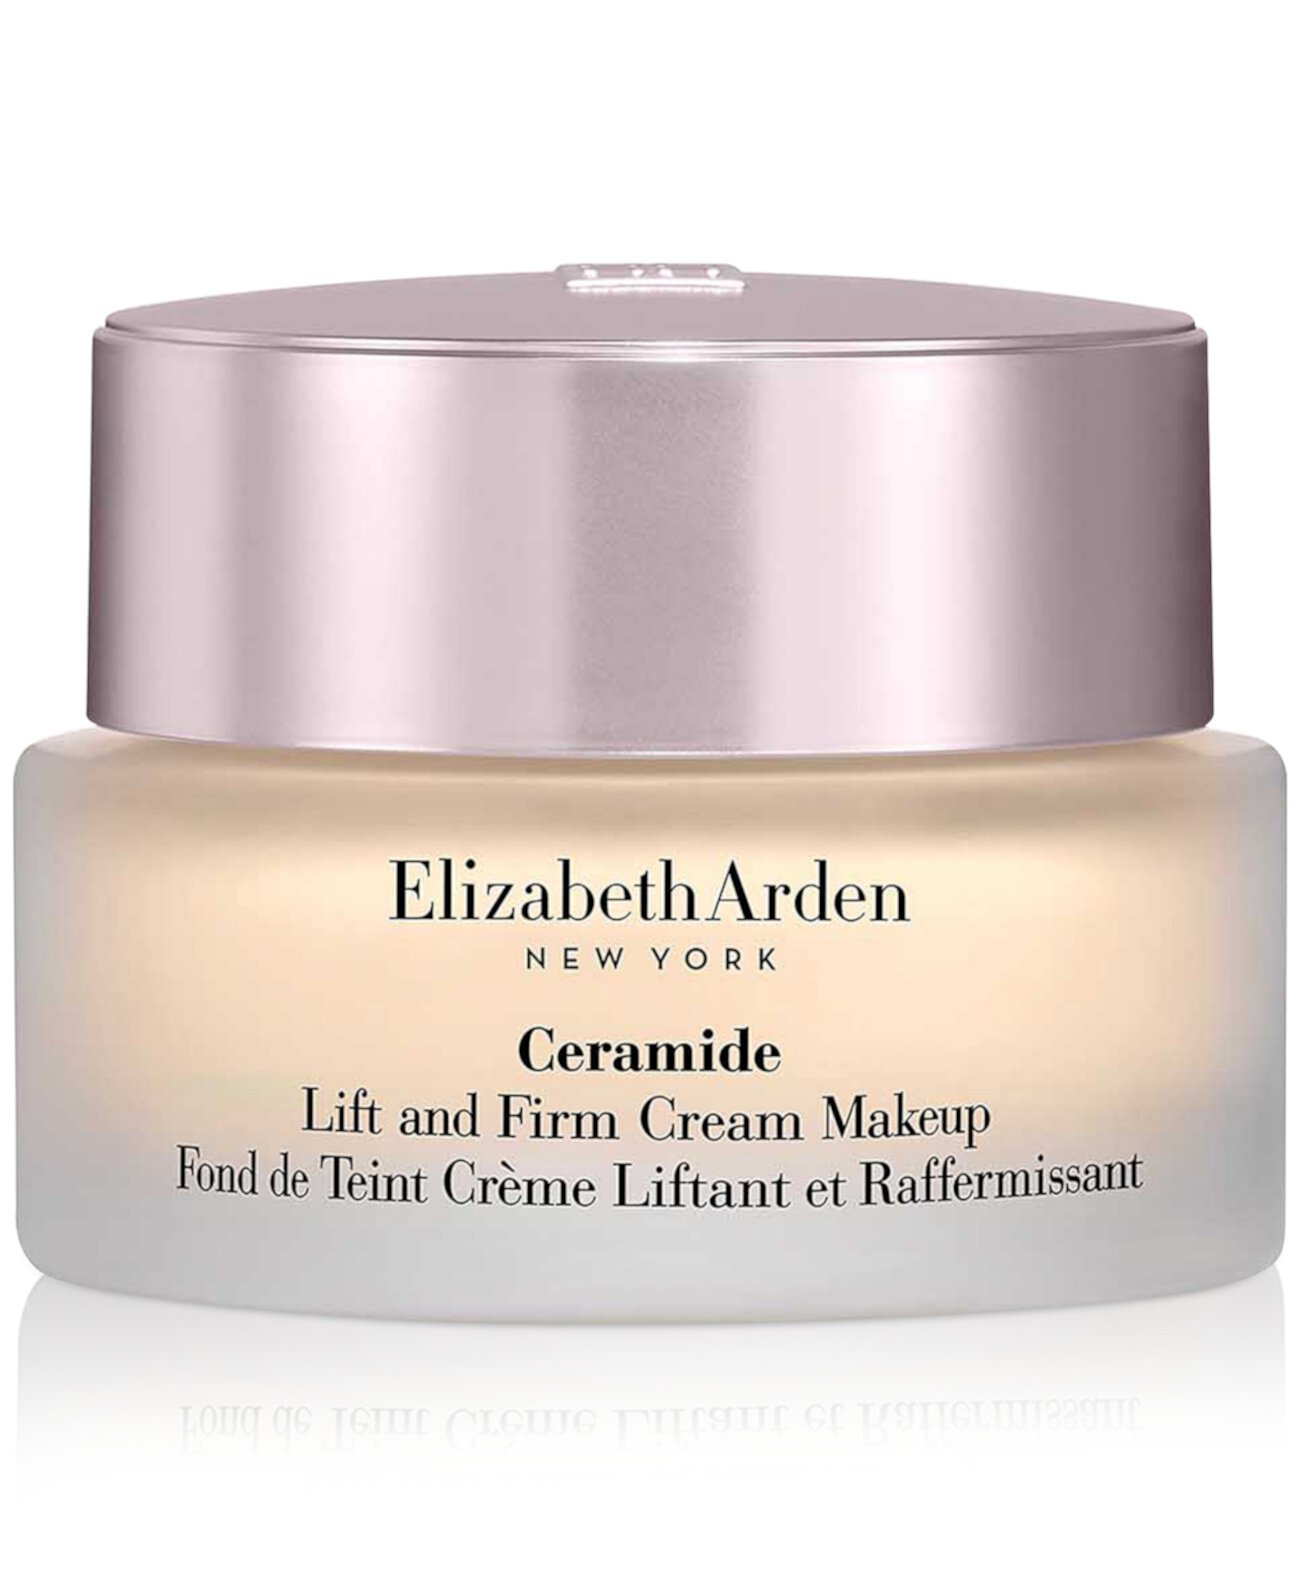 Ceramide Lift & Firm Cream Makeup Elizabeth Arden